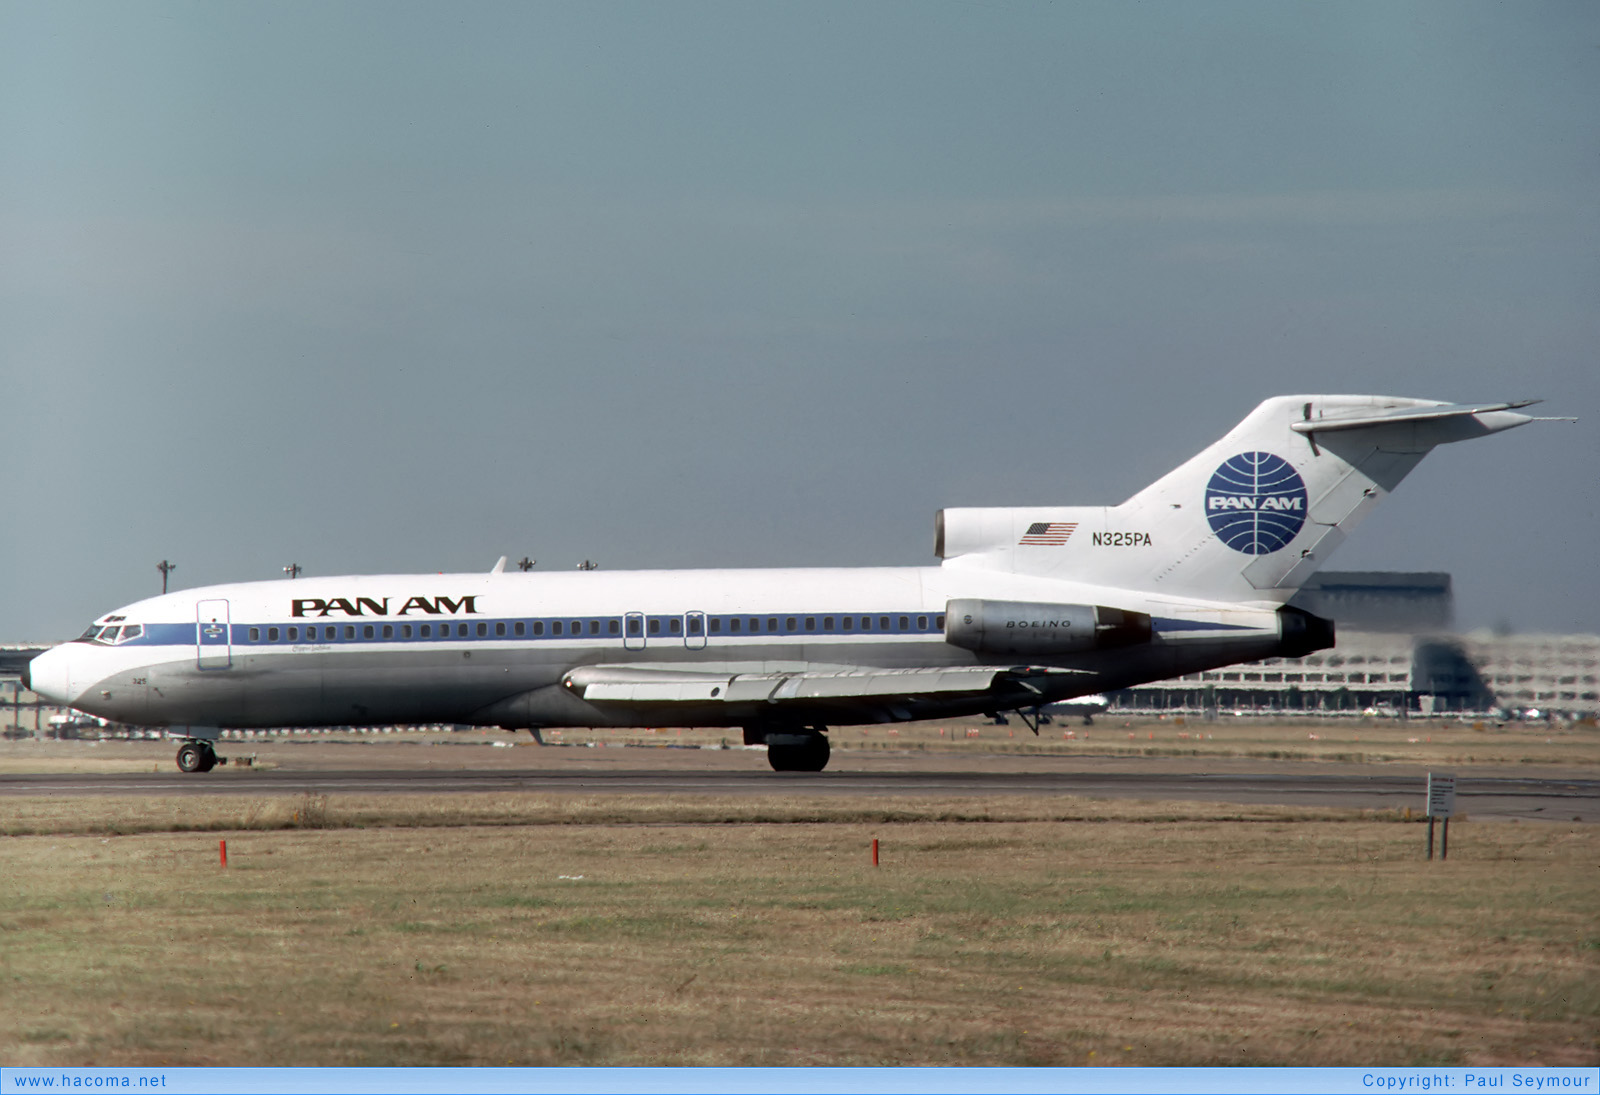 Photo of N325PA - Pan Am Clipper Duesseldorf / Dawn / Inca / Stuttgart / Syren / Dufte Biene / Luftikus - London Heathrow Airport - Sep 16, 1979